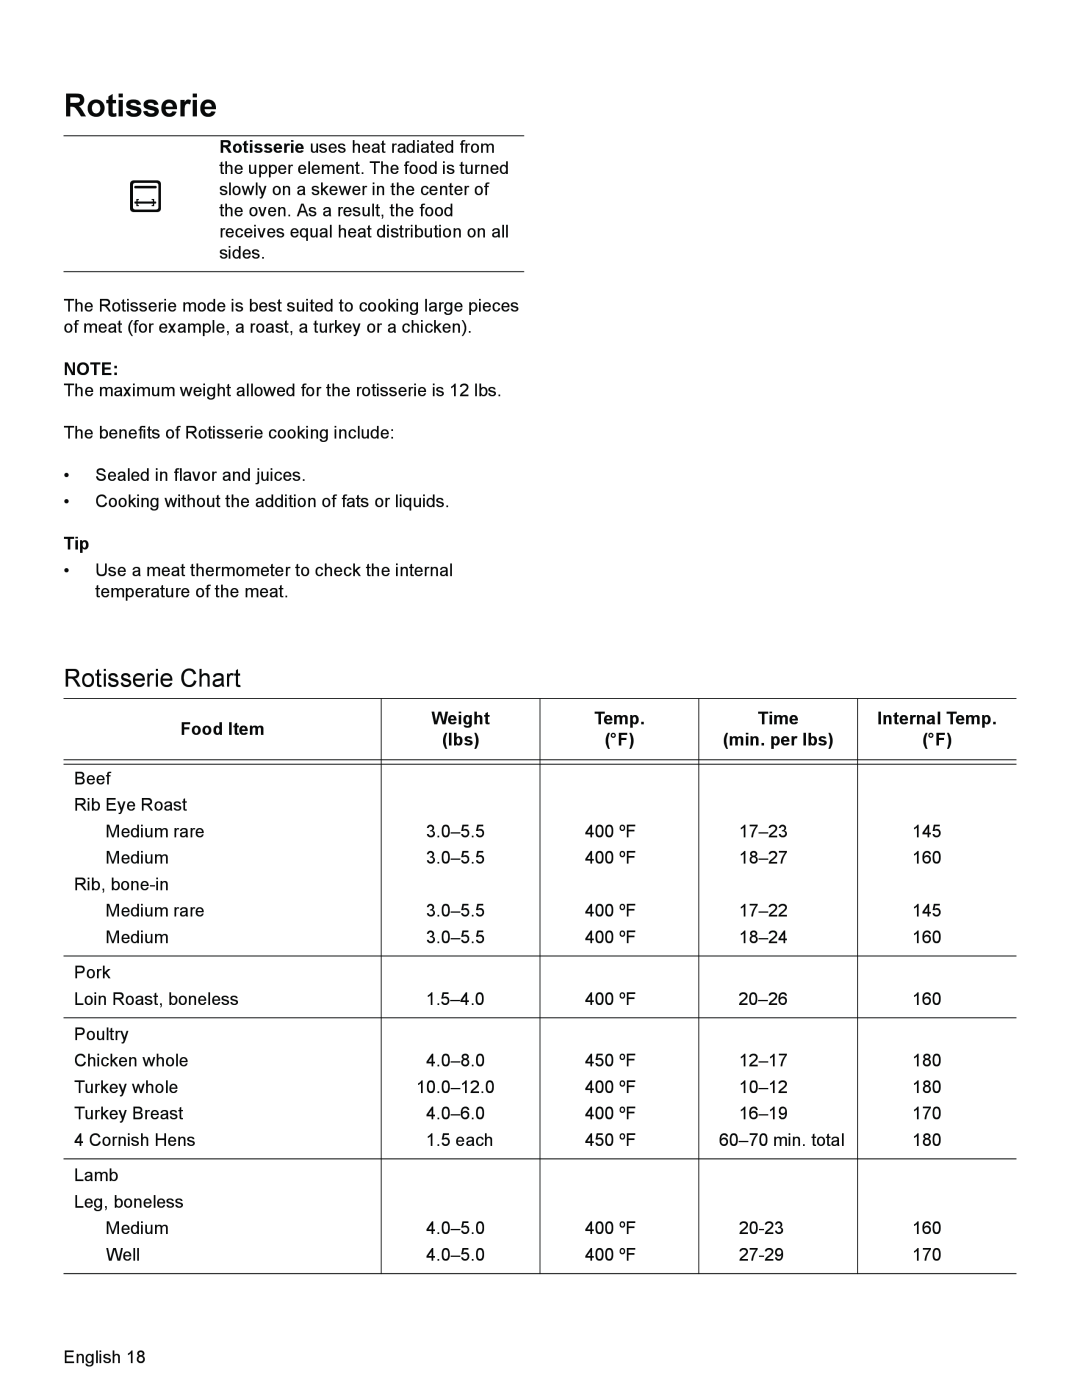 Thermador PODMW301, PODM301 manual Rotisserie Chart, Food Item, Weight, Time, Internal Temp, min. per lbs 